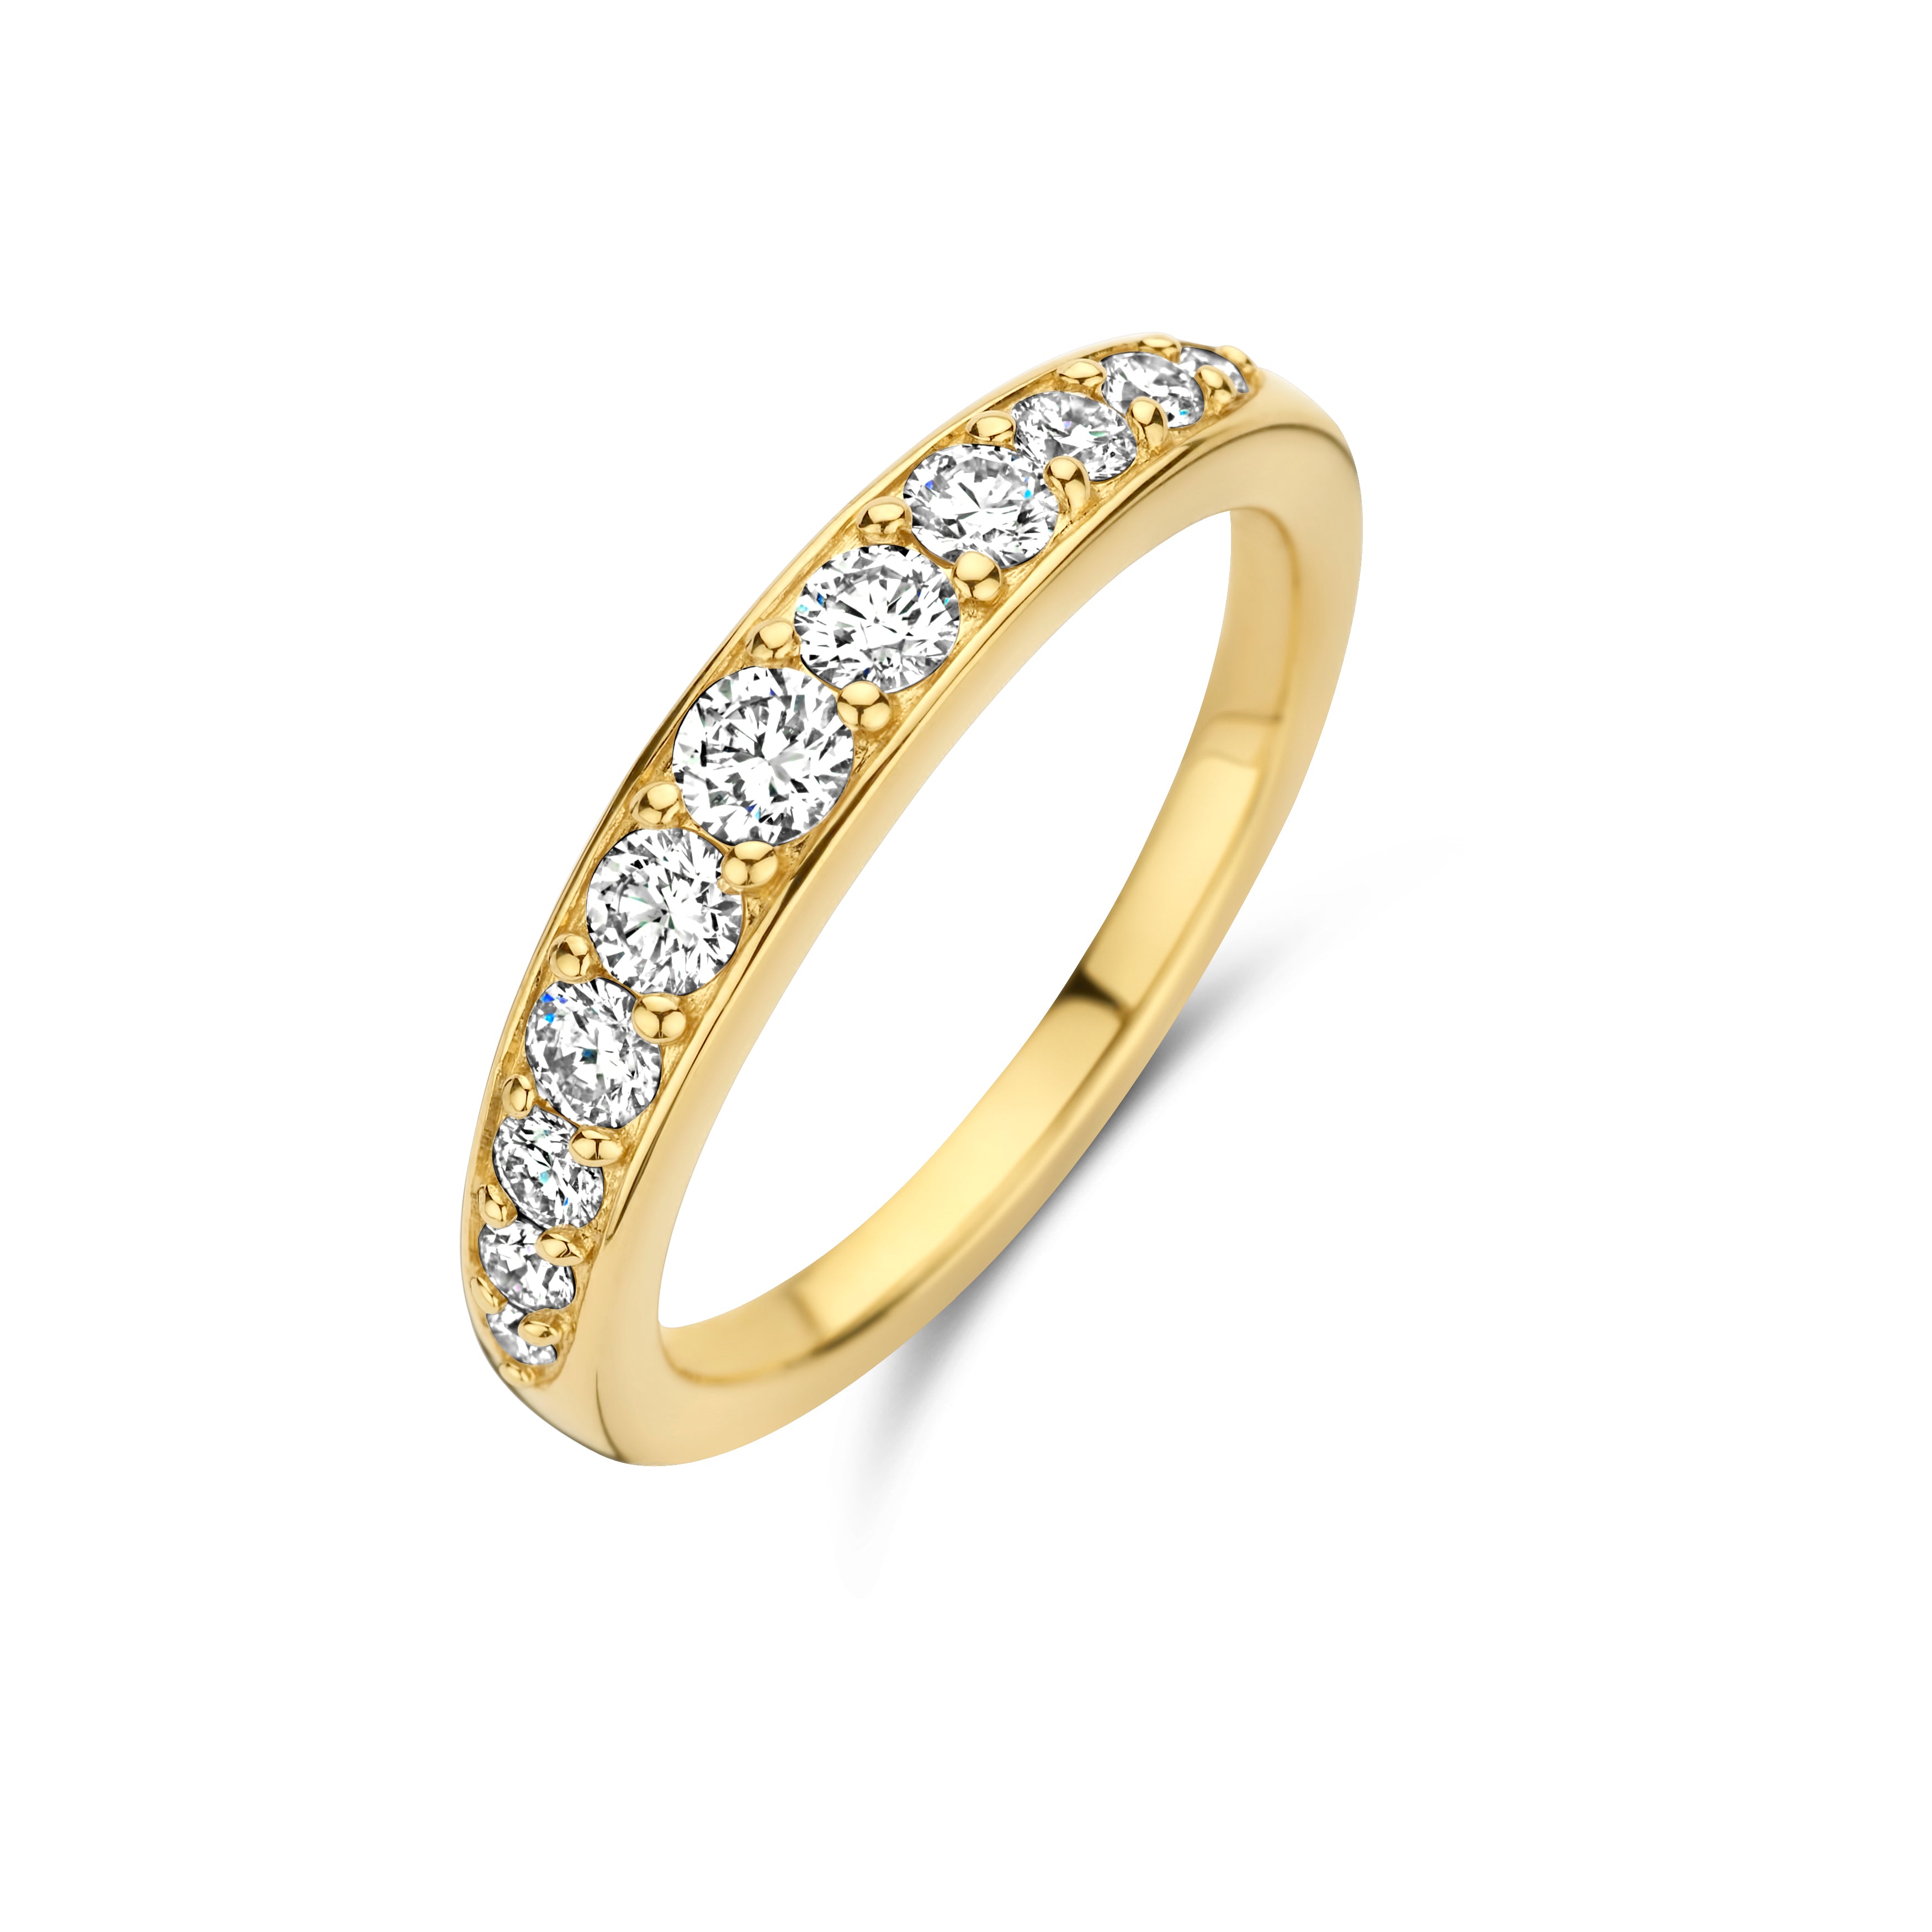 Treasure ring (L) - 14kt. guld med brillantslebne diamanter-1